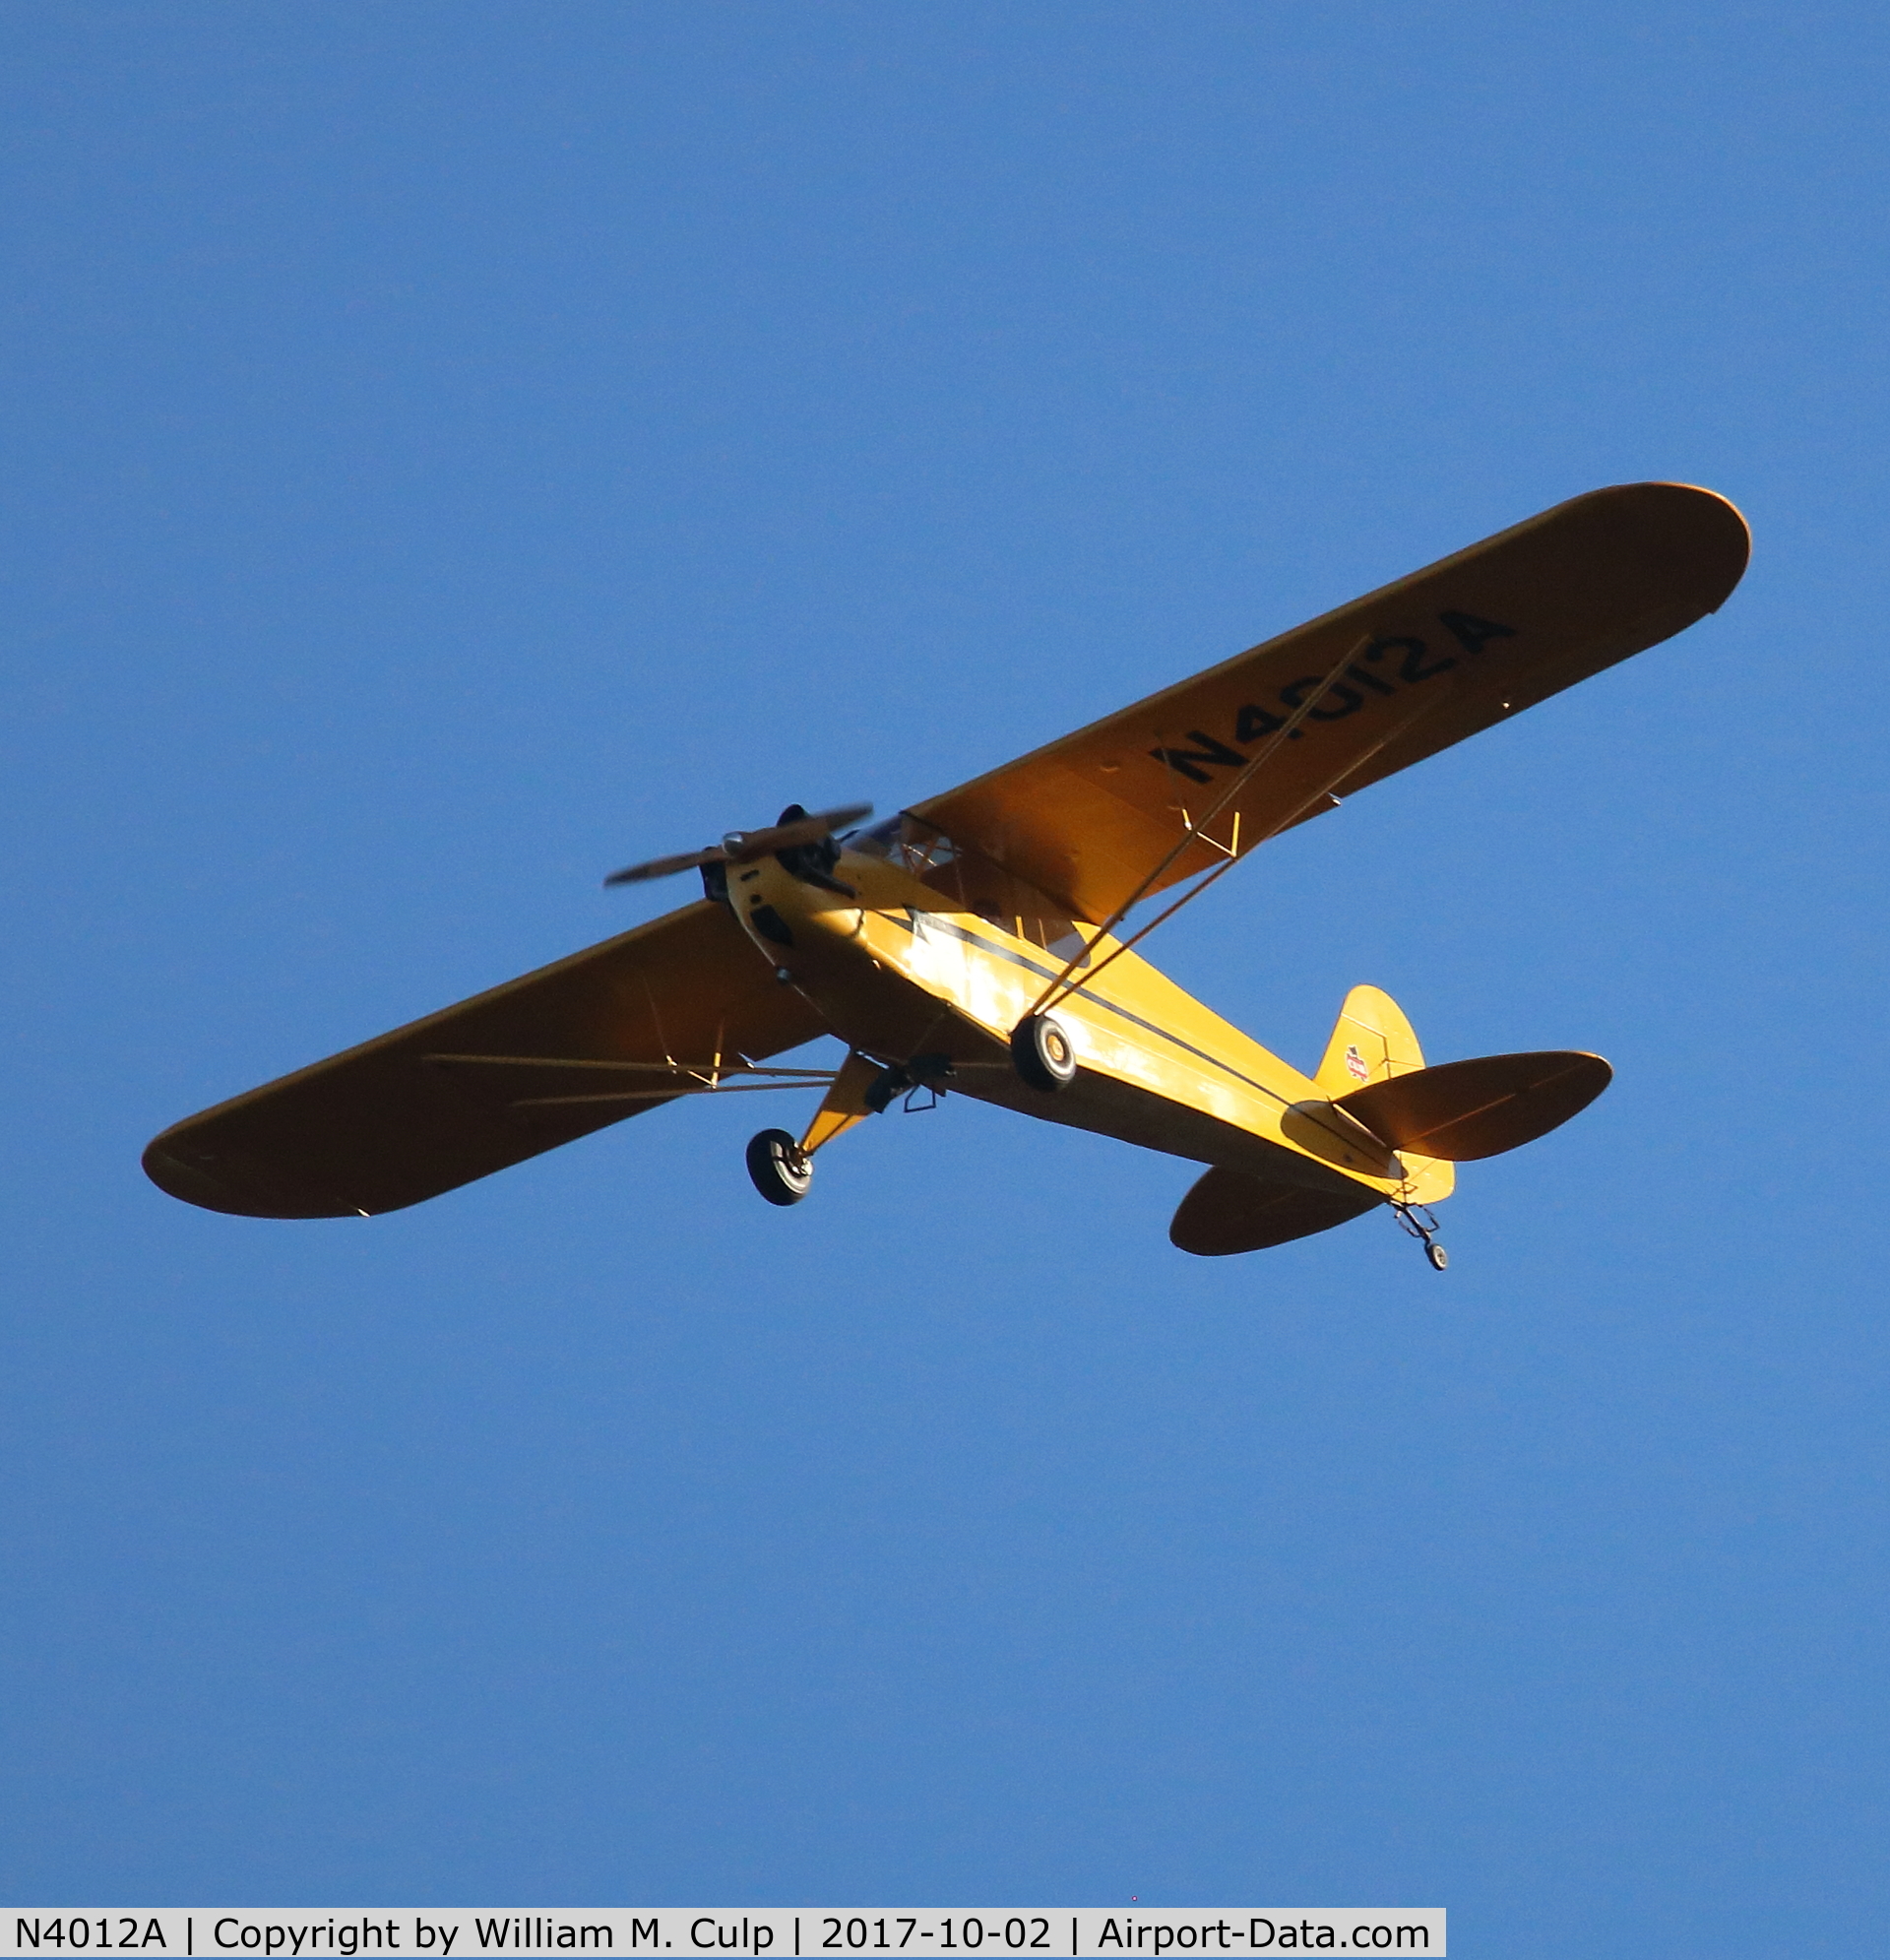 N4012A, 1943 Piper J3C-65 Cub Cub C/N 43-1438, I seen it flying over Peace Valley Park, Doylestown Pa.